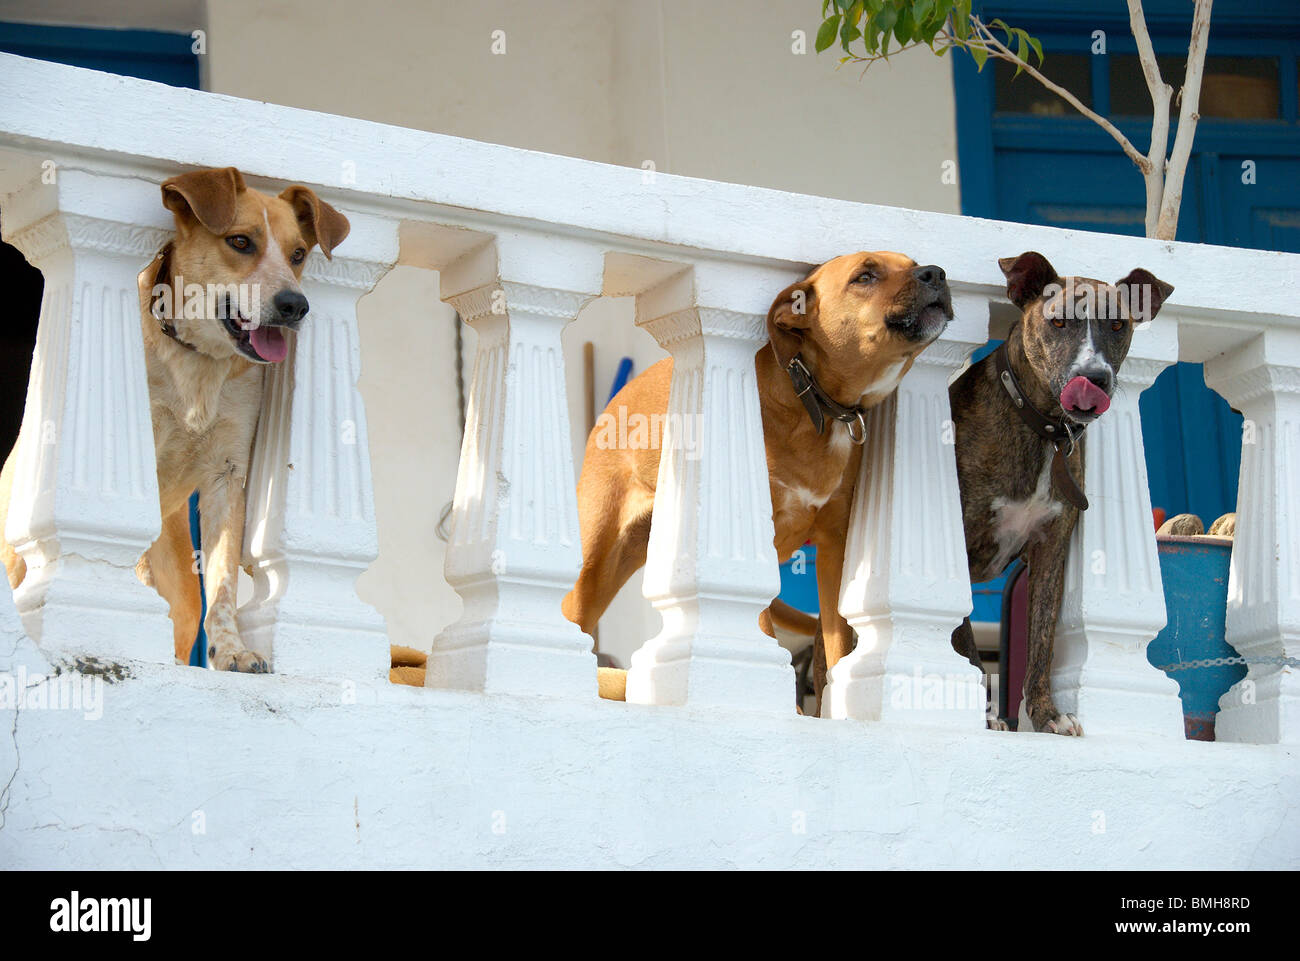 Three dogs peering through balustrades Stock Photo